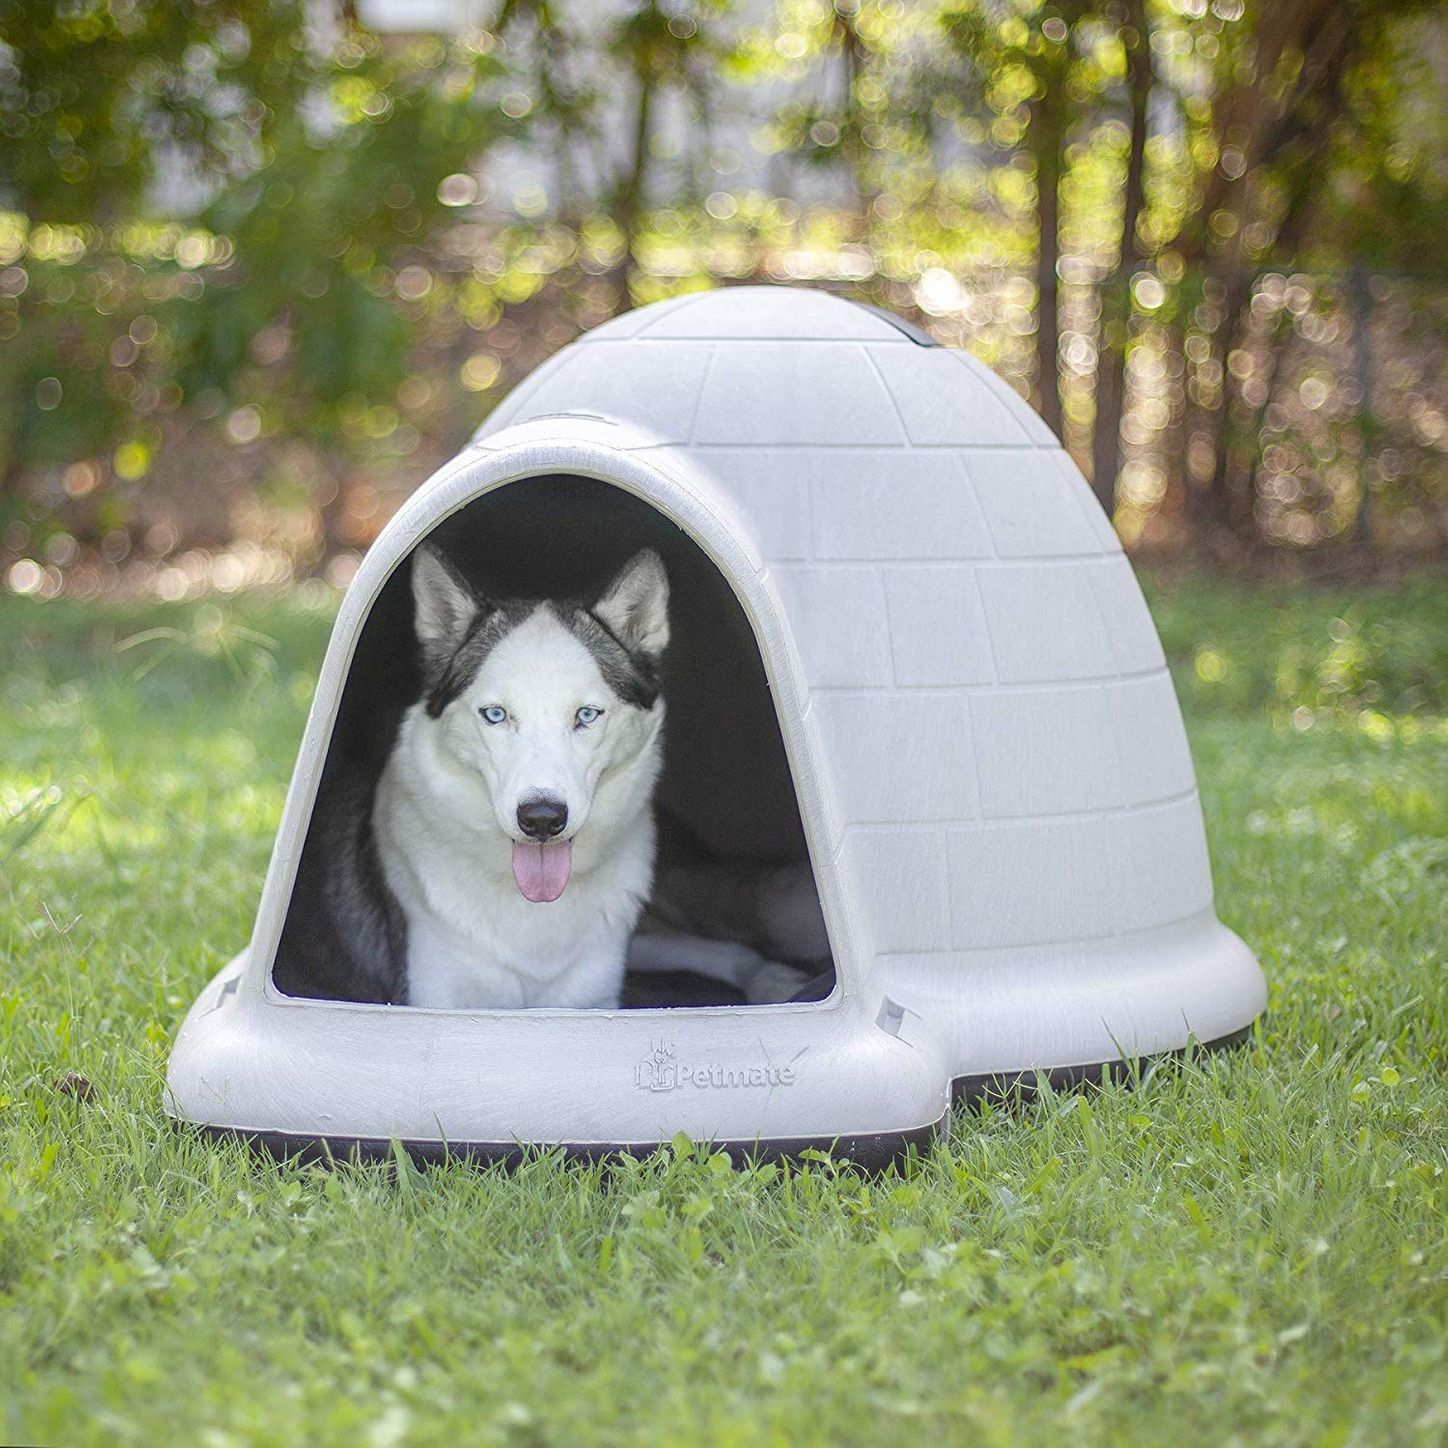 igloo dog house accessories